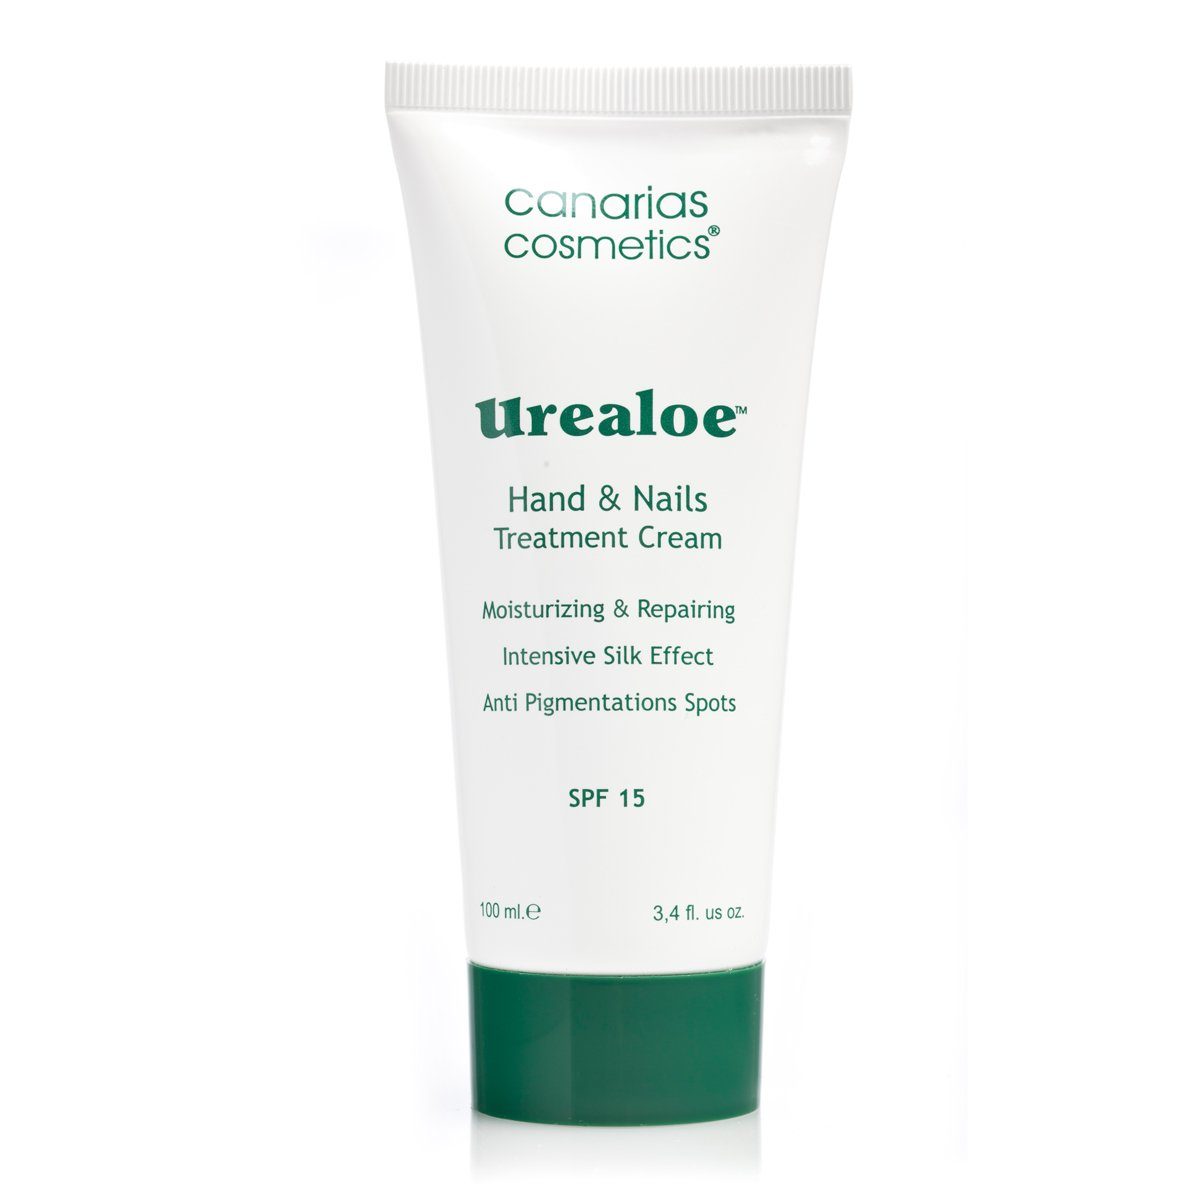 Urealoe Cream (100 ml) & canarias Handcreme CC cosmetics Nails Hand Treatment